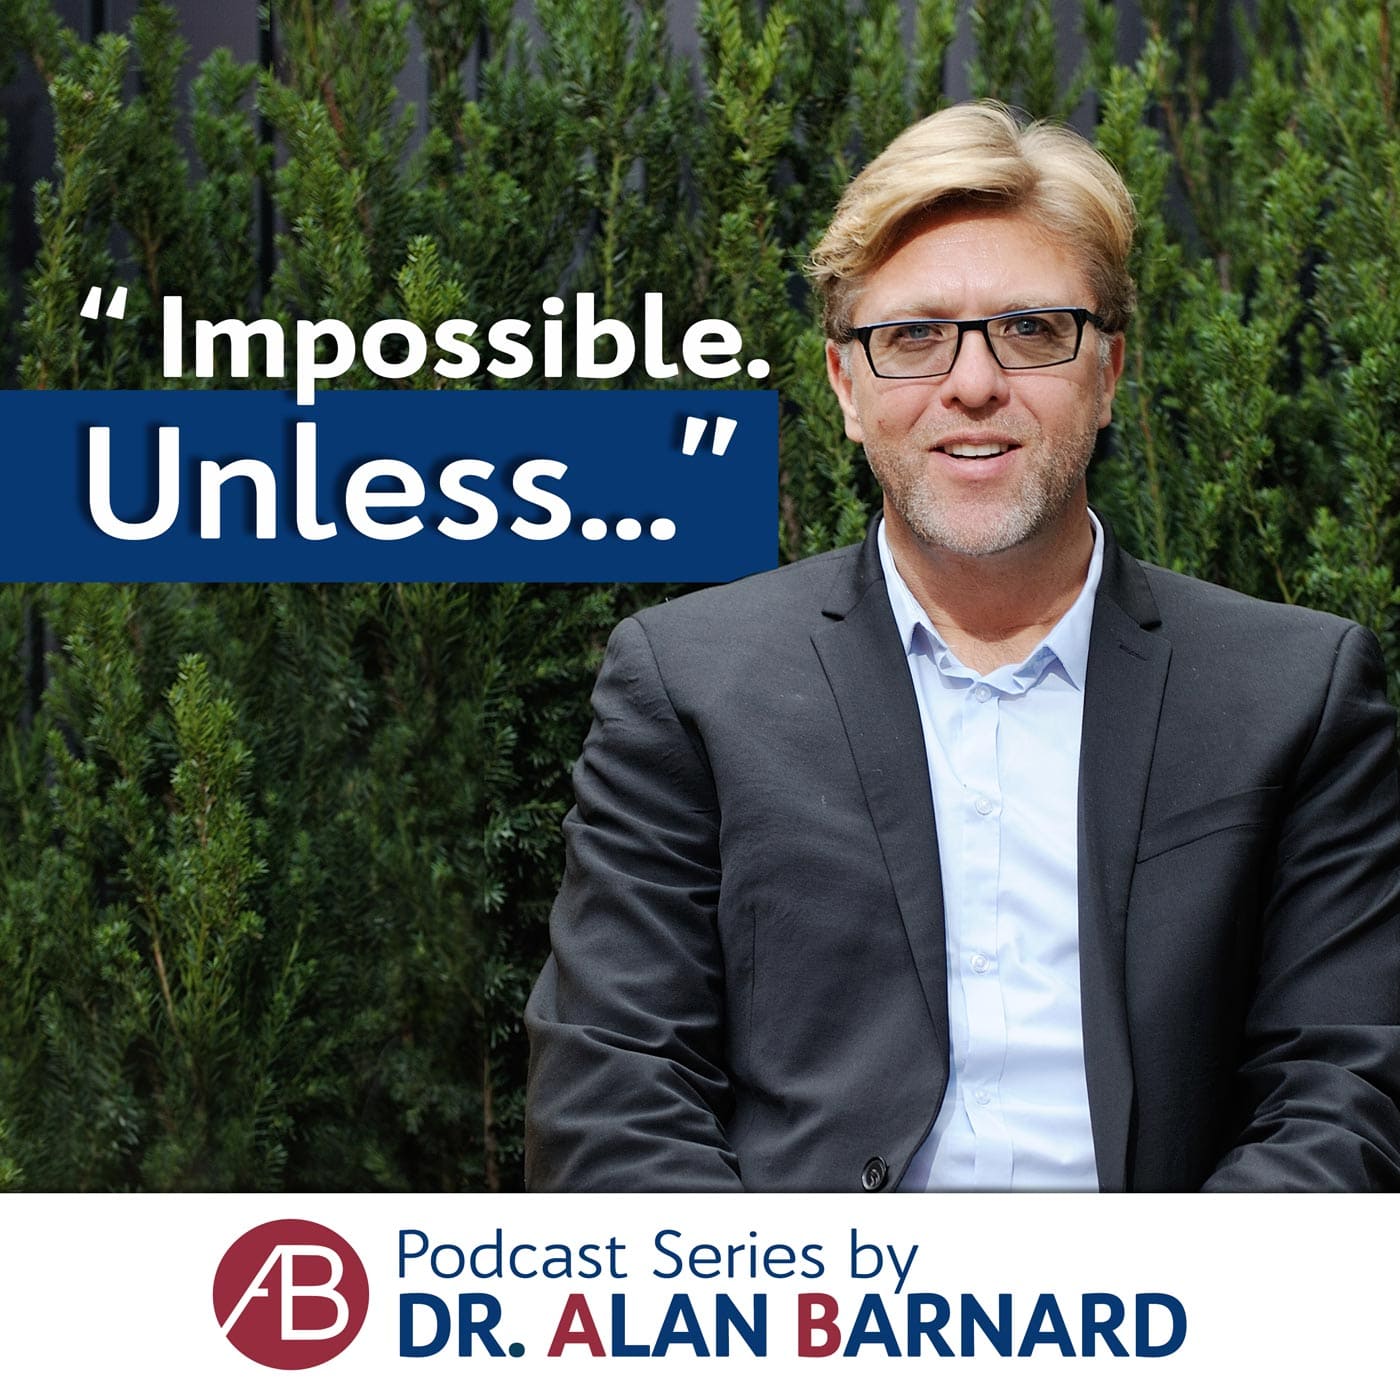 Dr. Alan Barnard